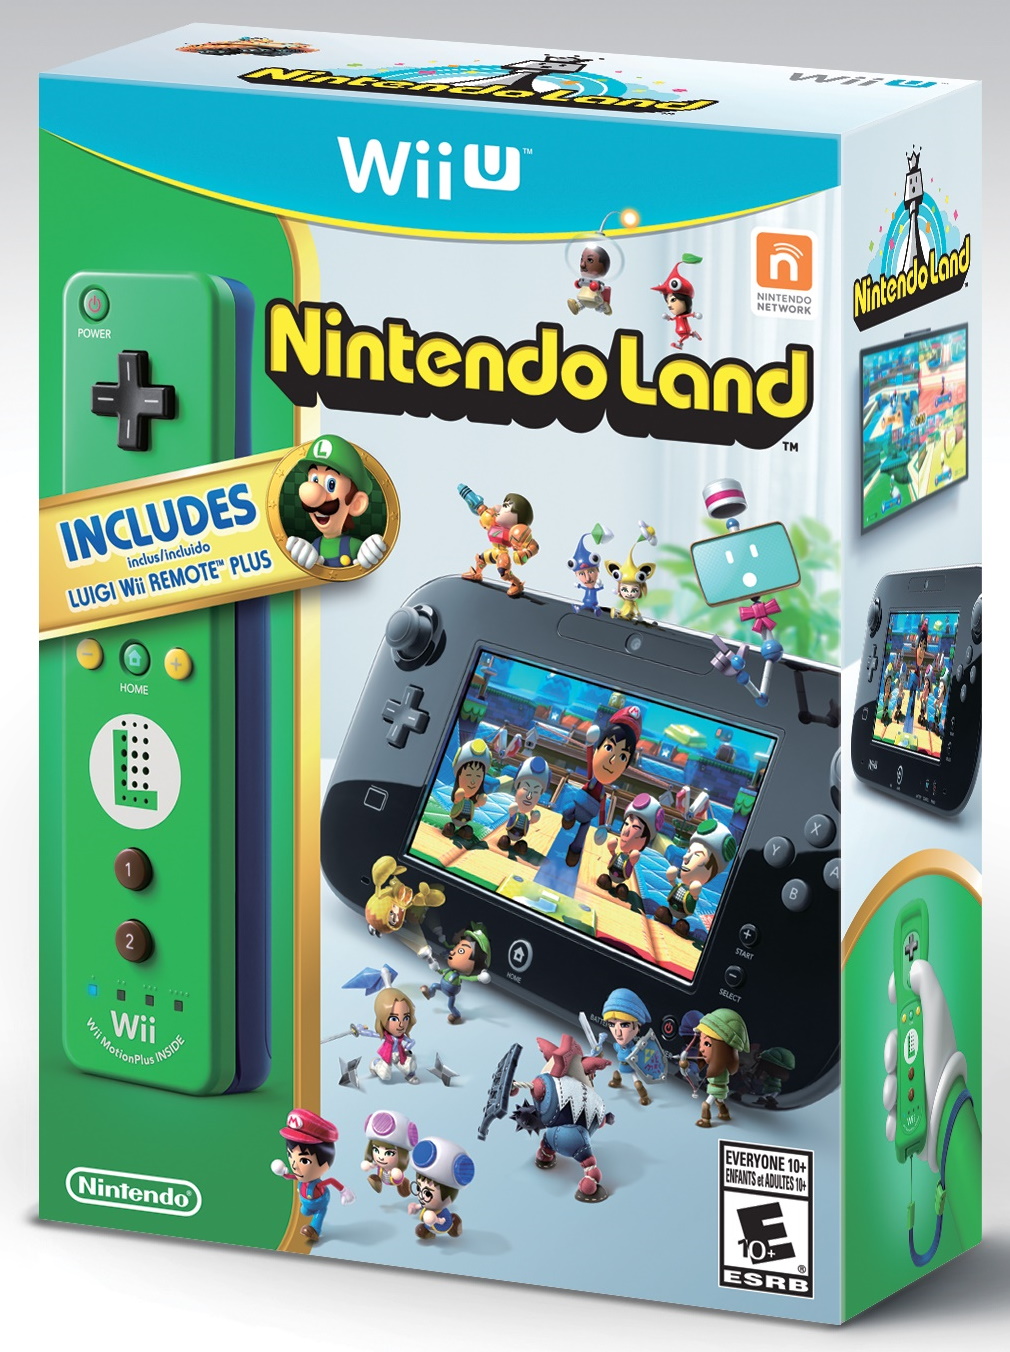 Nintendo land. Nintendo Land [Wii u]. Nintendo Wii u Remote Plus Luigi. Wii u Nintendo маленький. Нинтендо Лэнд фрукты.